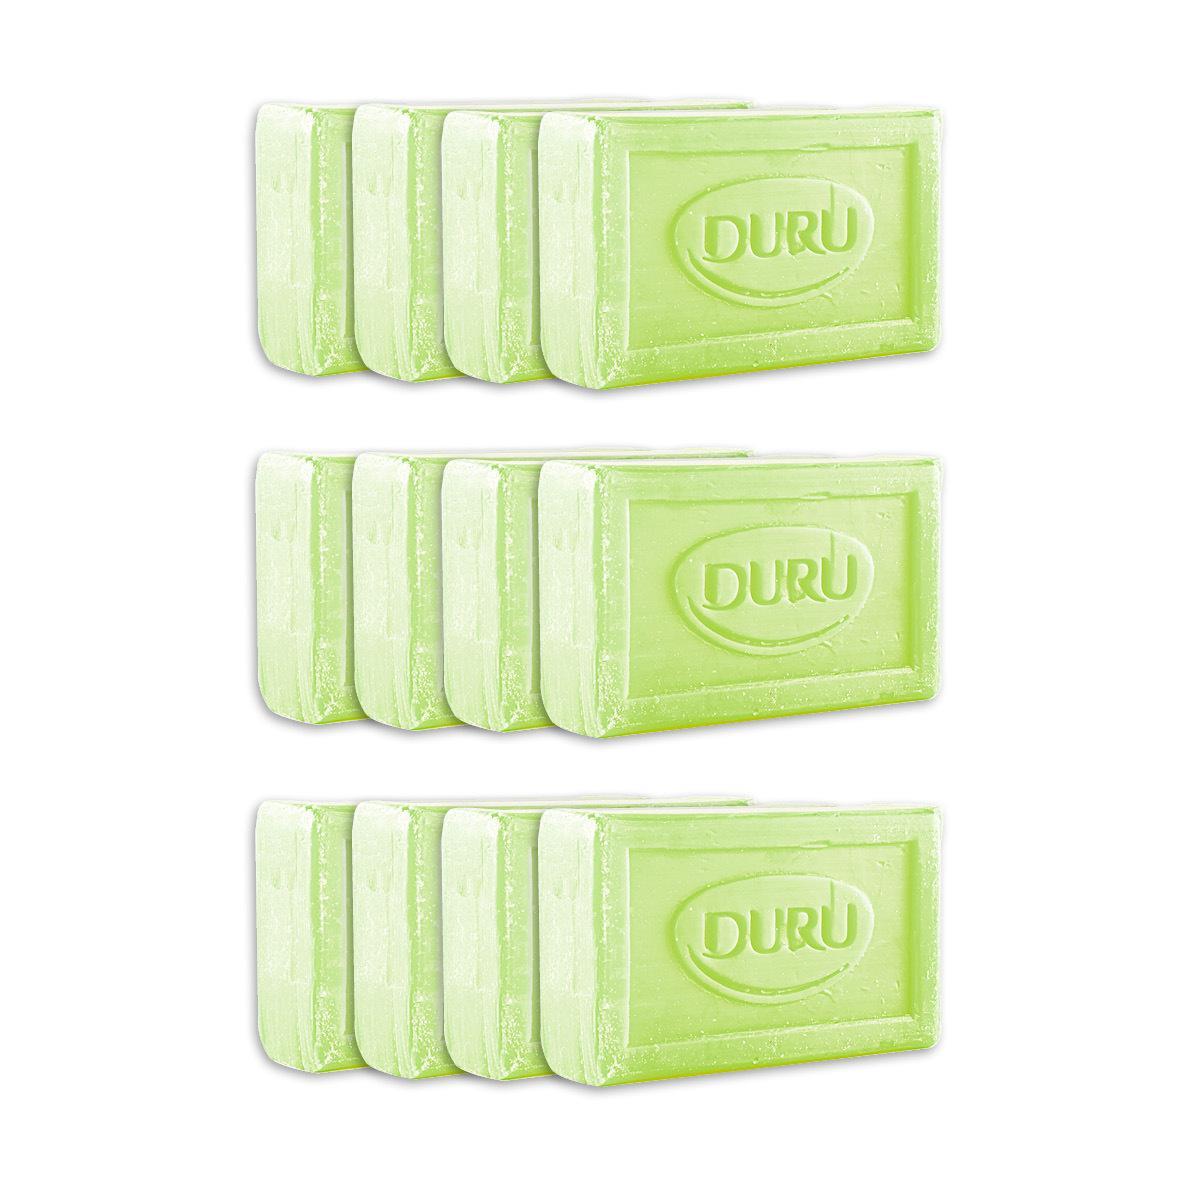 Duru 12PK Nourish Body Soap Refreshing Cucumber Natural Herbal Soap 140g